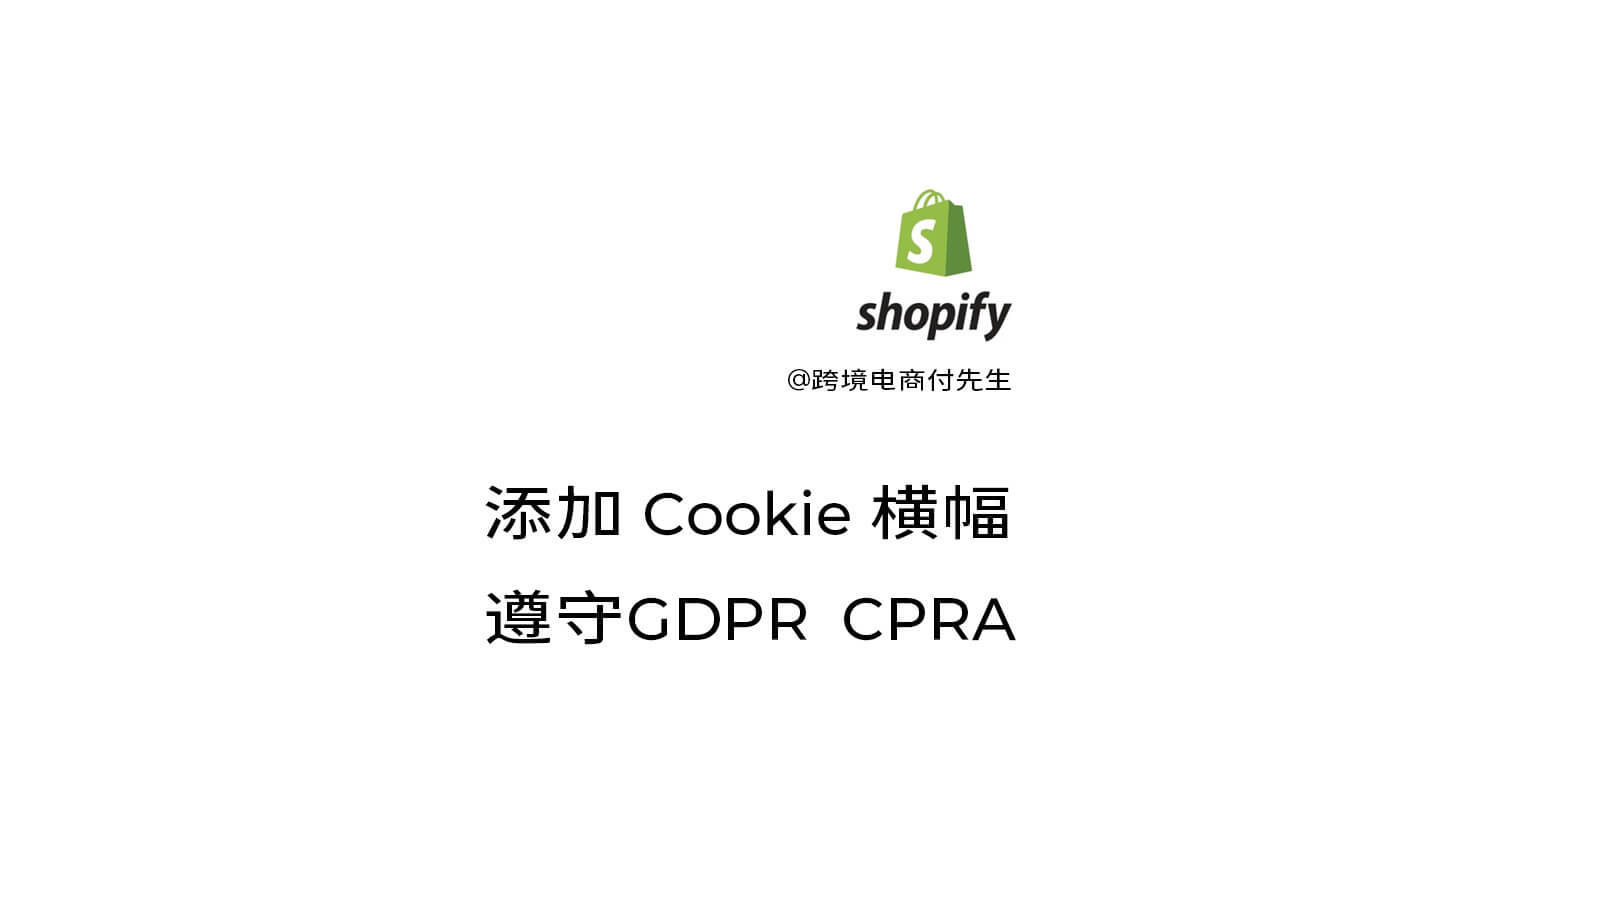 Shopify设置Cookie 横幅客户隐私